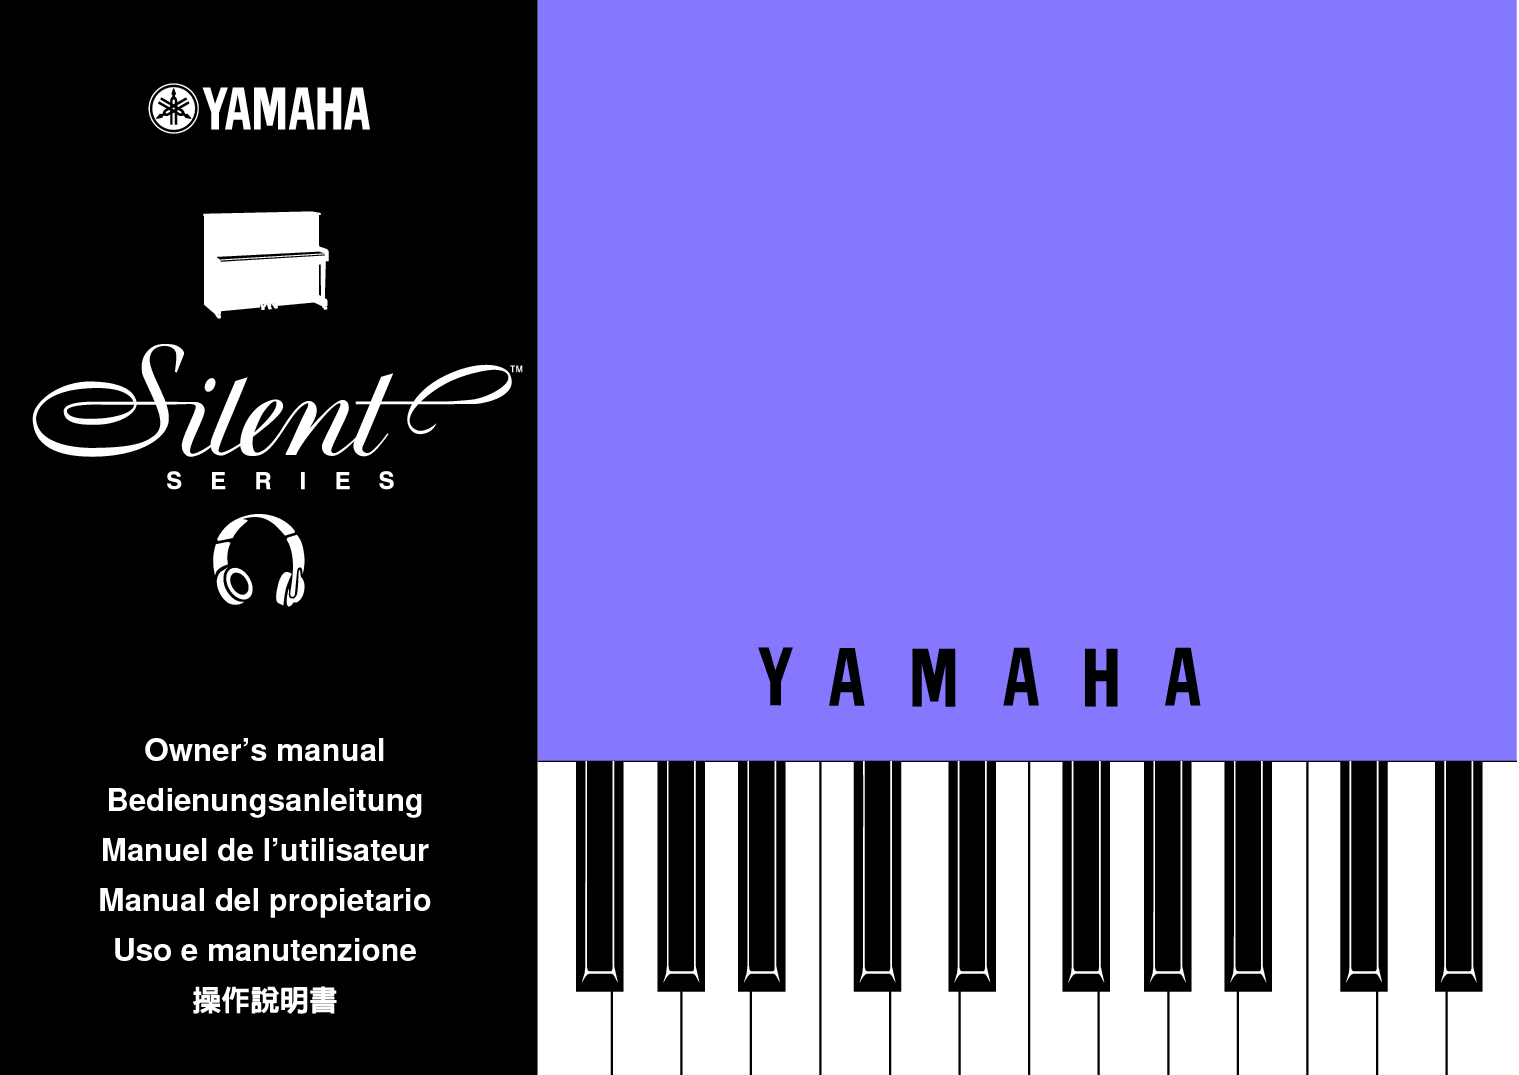 雅马哈 Yamaha Silent 使用说明书 封面